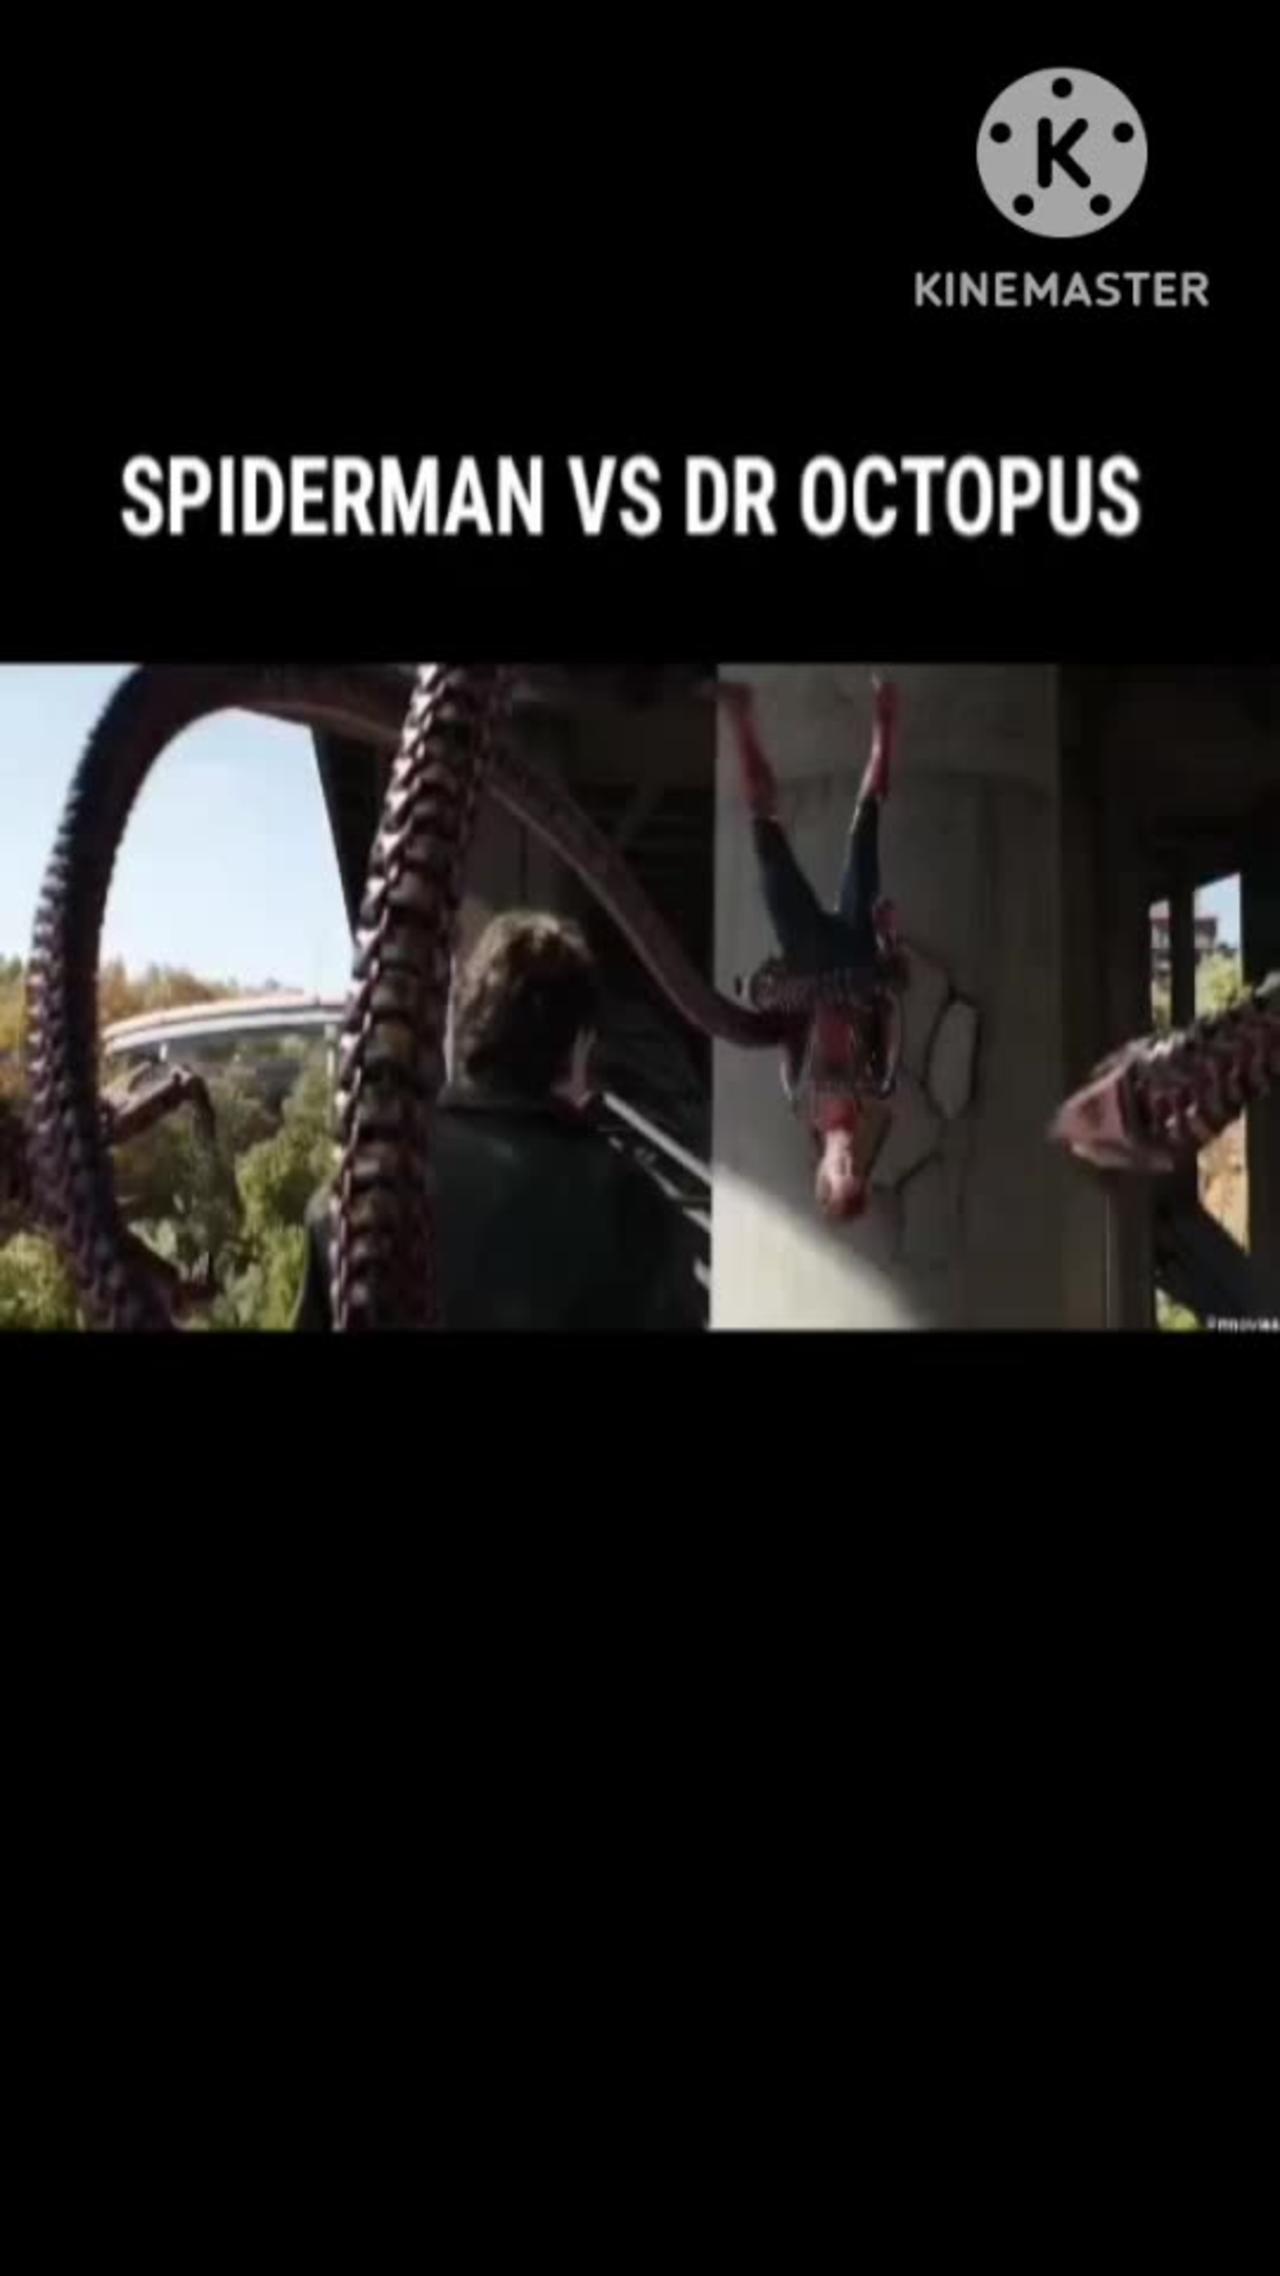 SPIDERMAN VS DR OCTOPUS ACTION SCENE